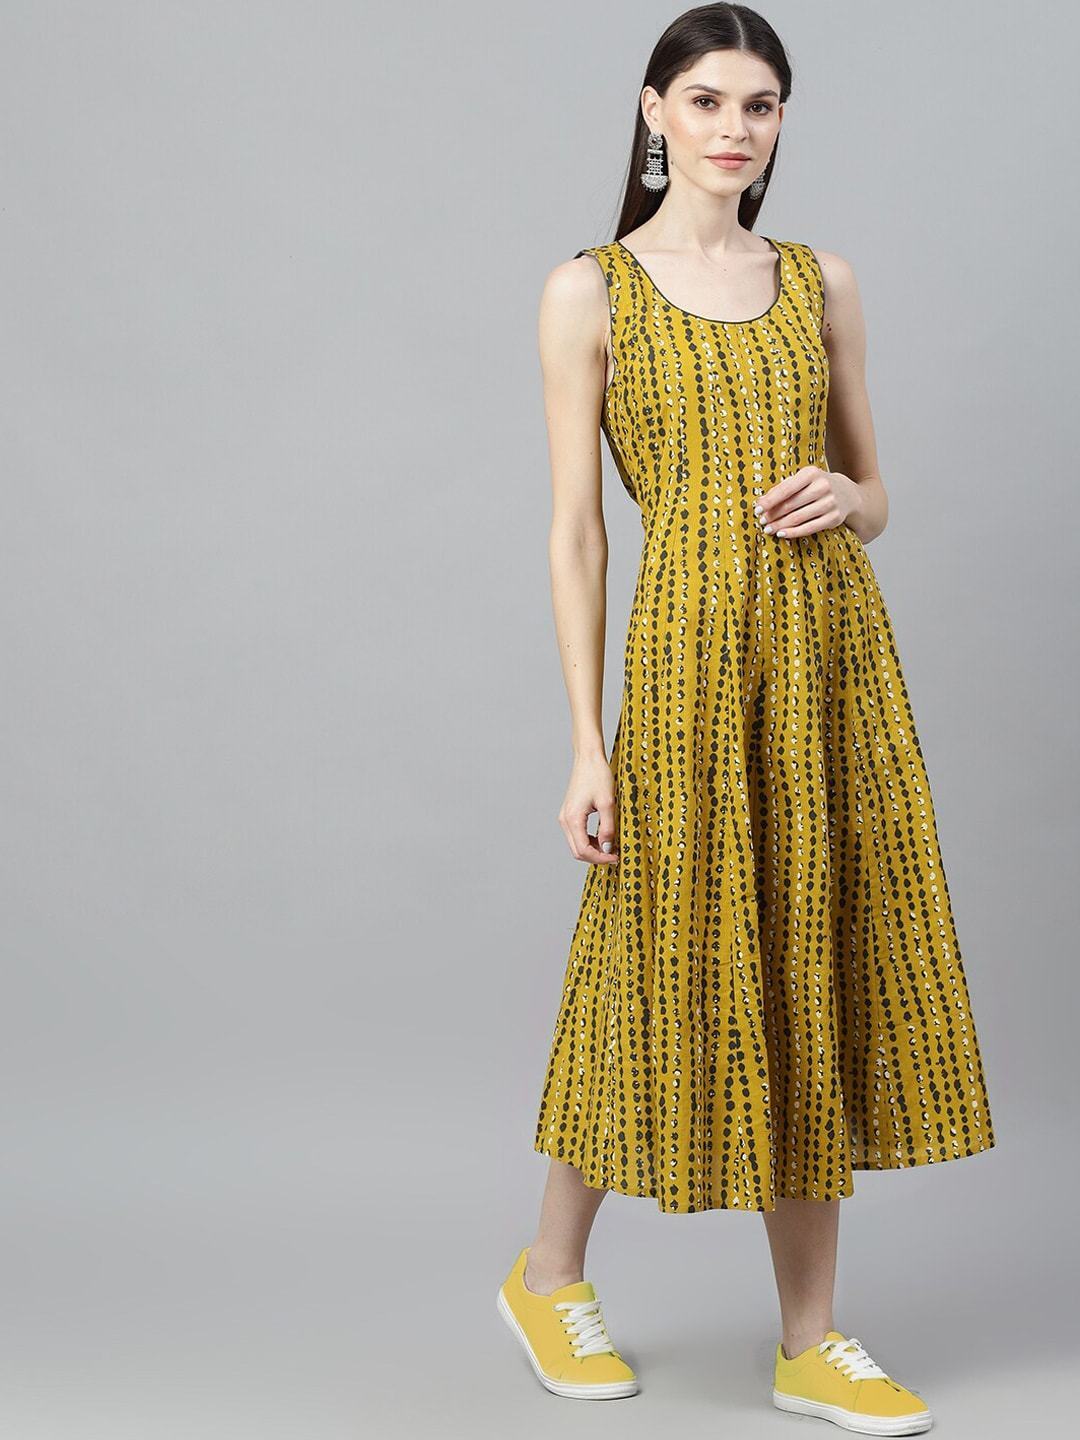 Women's  Mustard Printed A-Line Dress - AKS